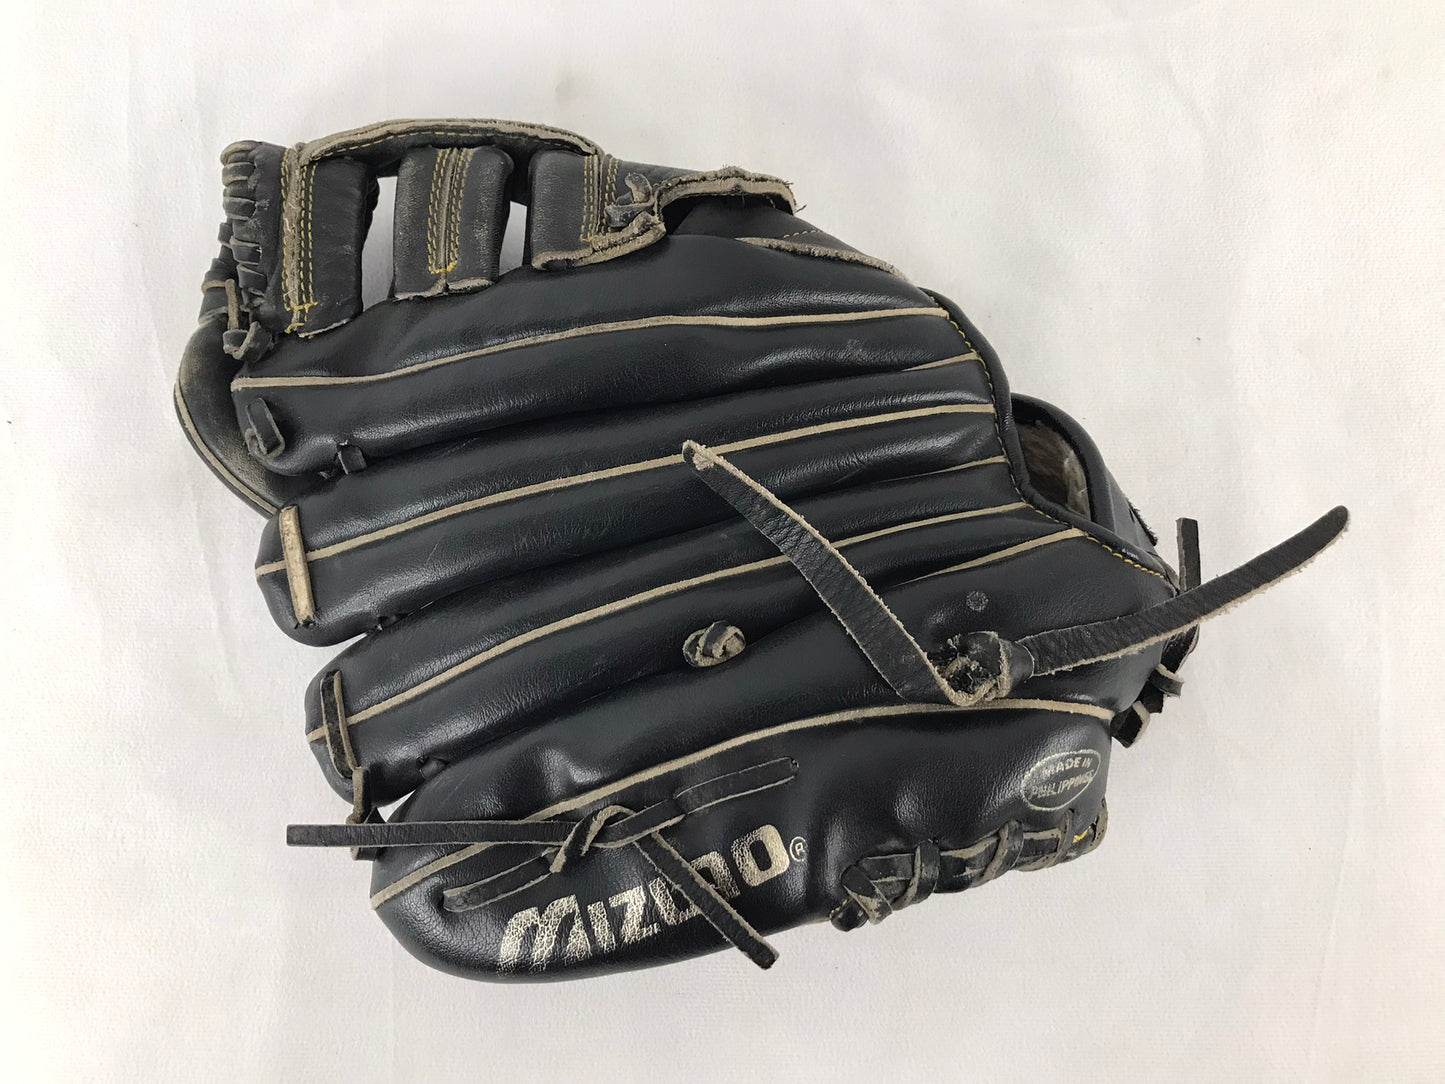 Baseball Glove Child Size 11.5 Mizuno Black Soft Leather Fits On Left Hand